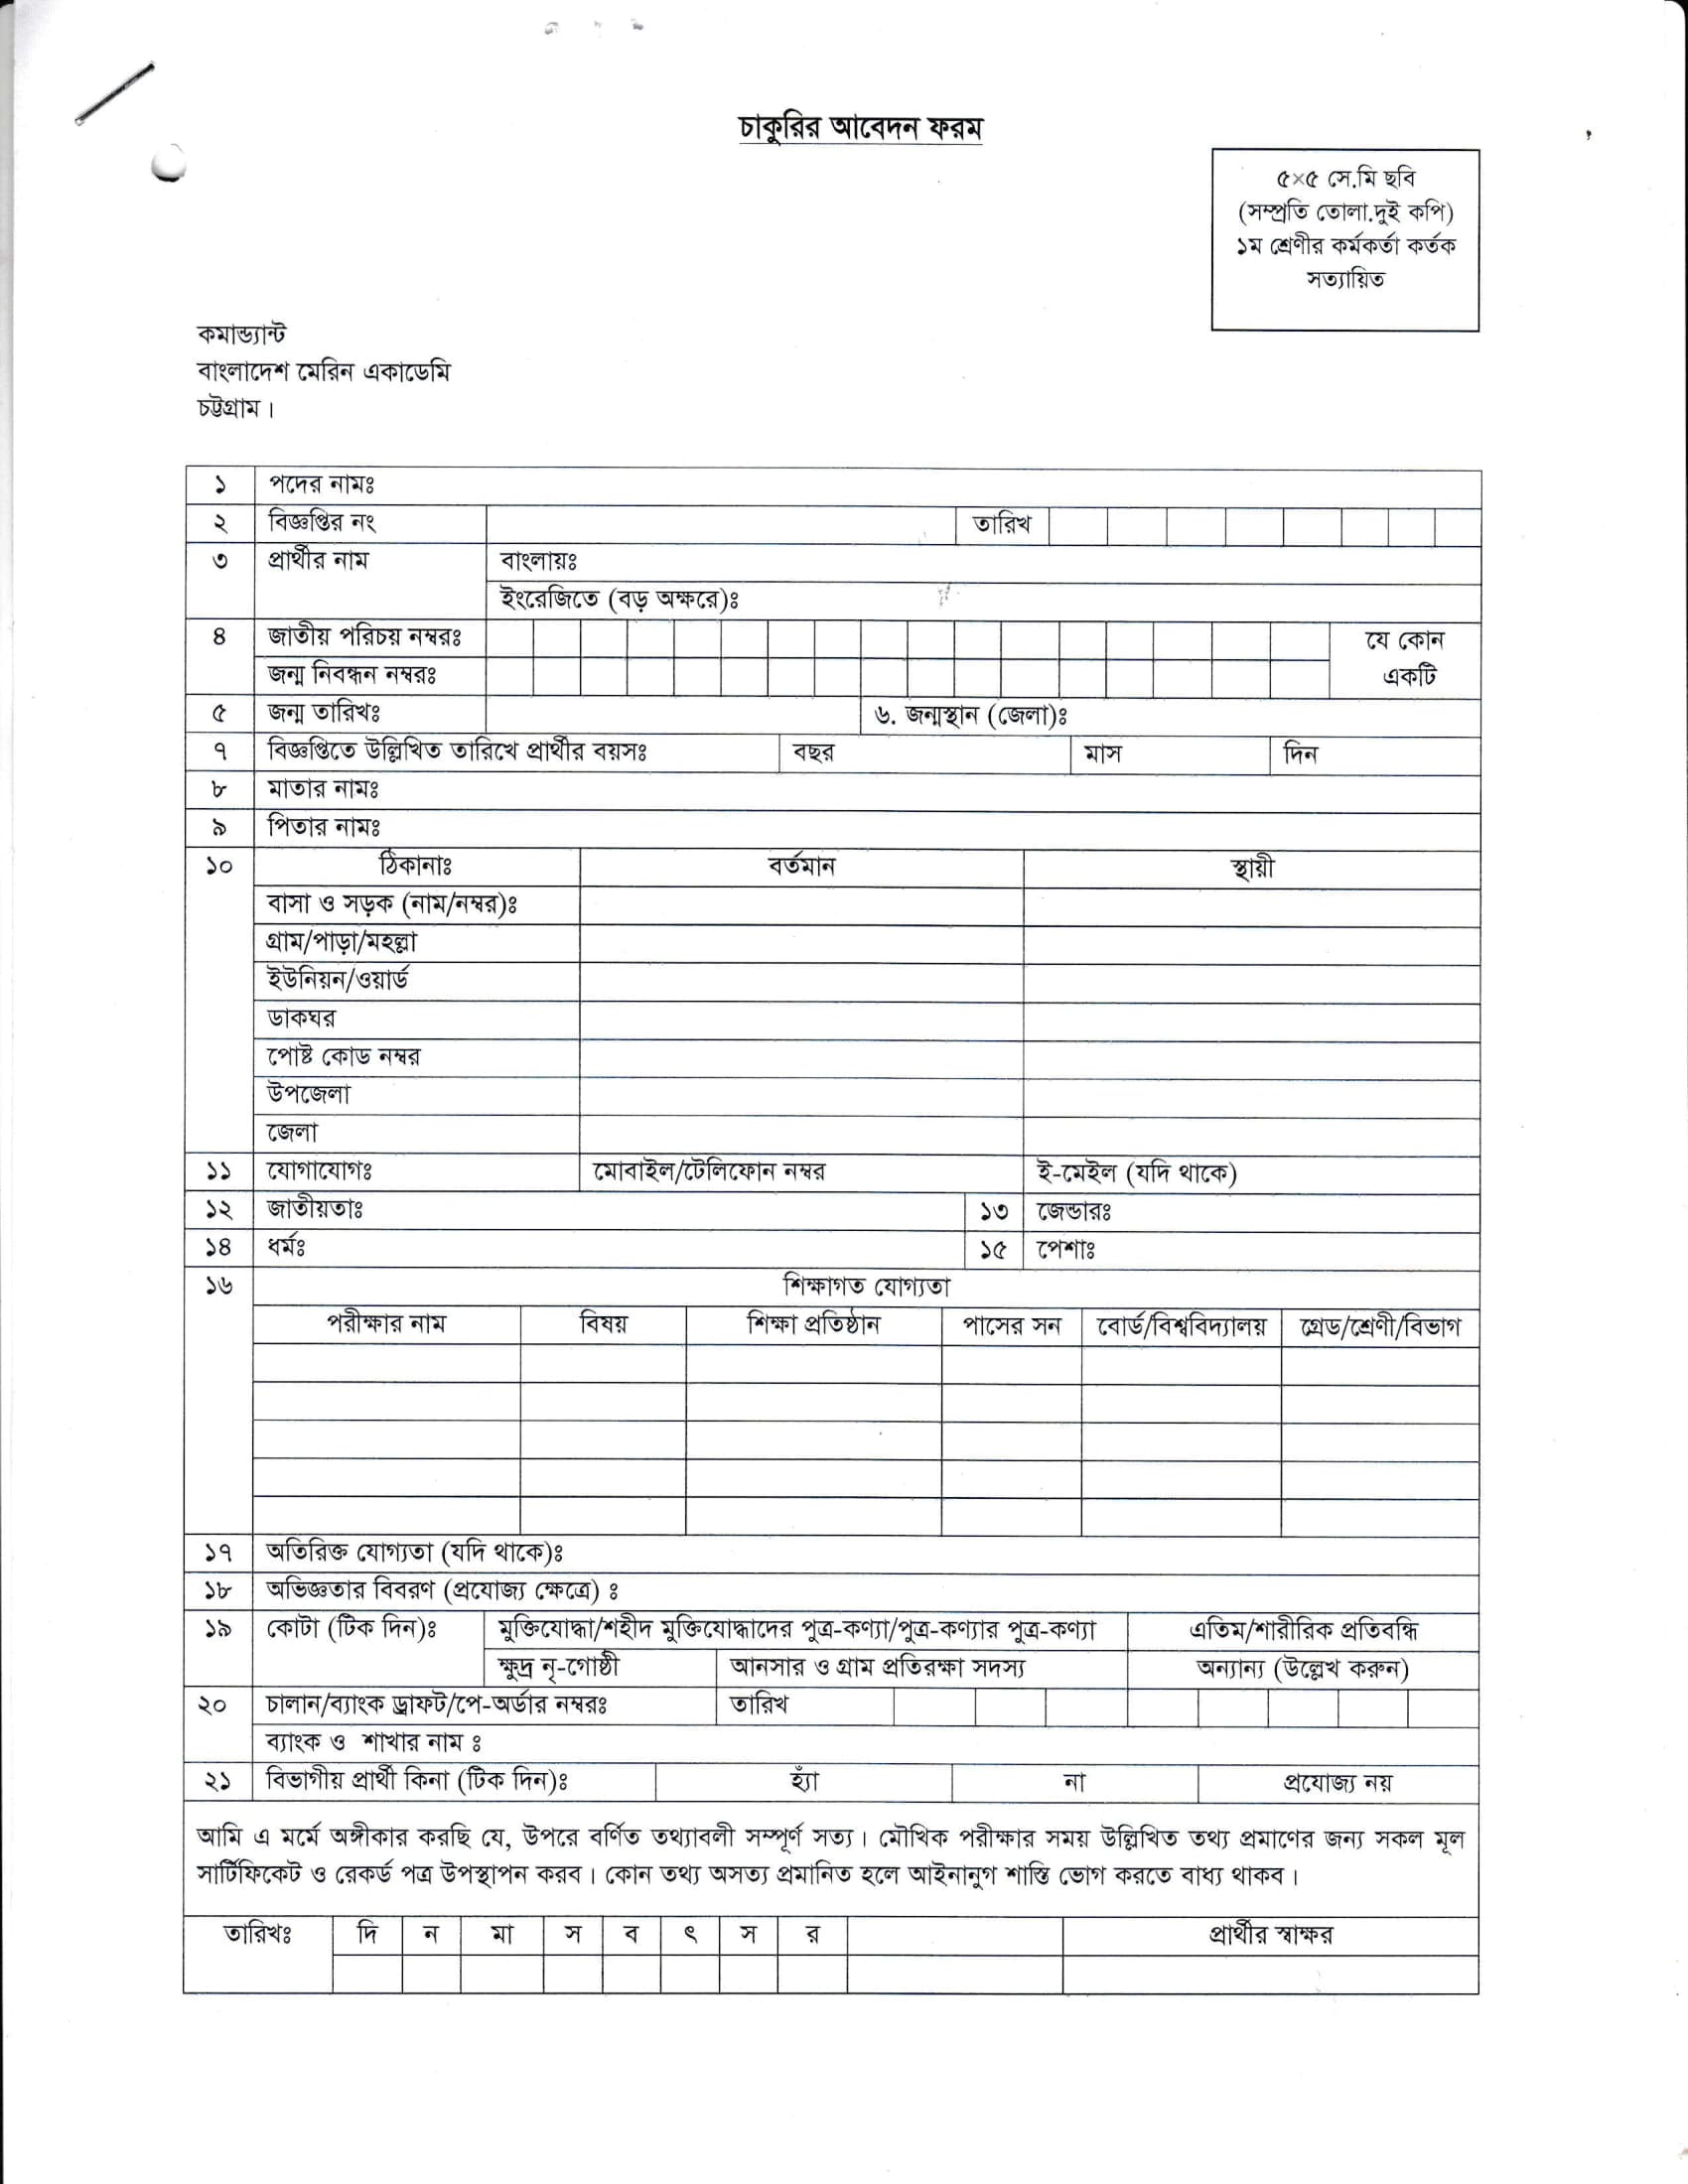 Bangladesh Marine Academy Job Application Form